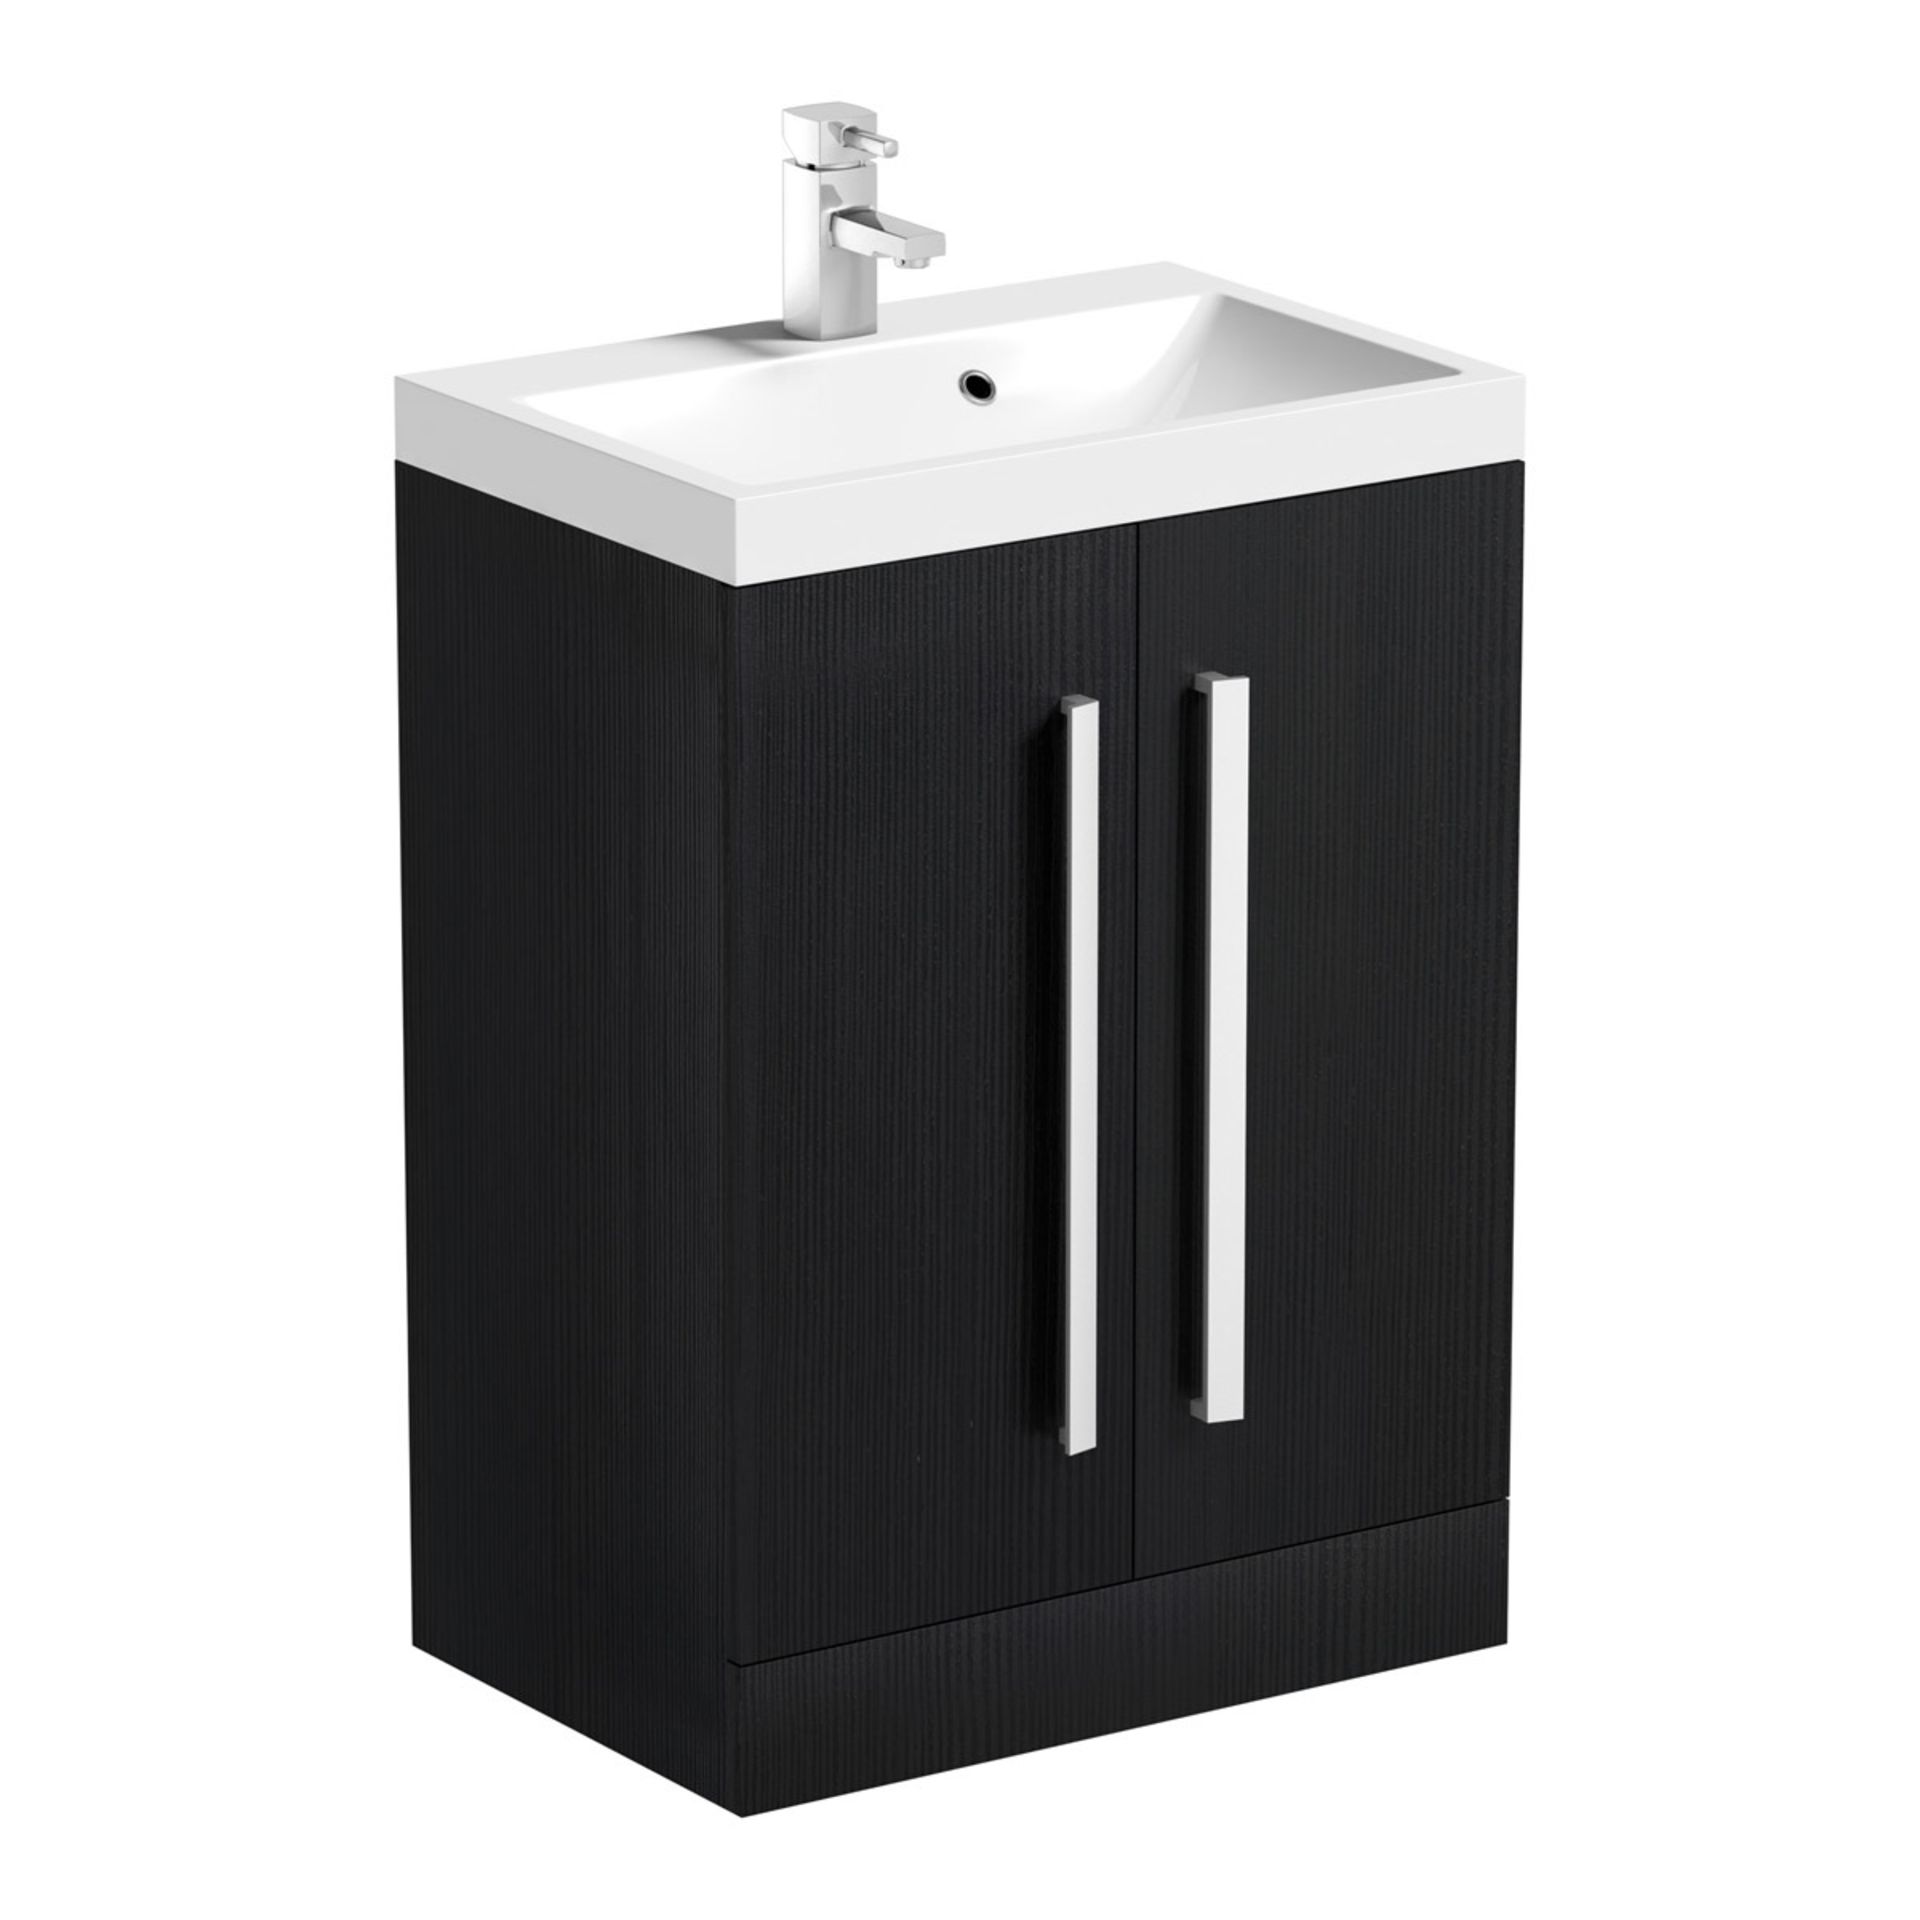 1 x Arden Essen Drift 600mm Vanity Unit With Sink Basin - Unused Stock - CL190 - Ref BOLT040 -